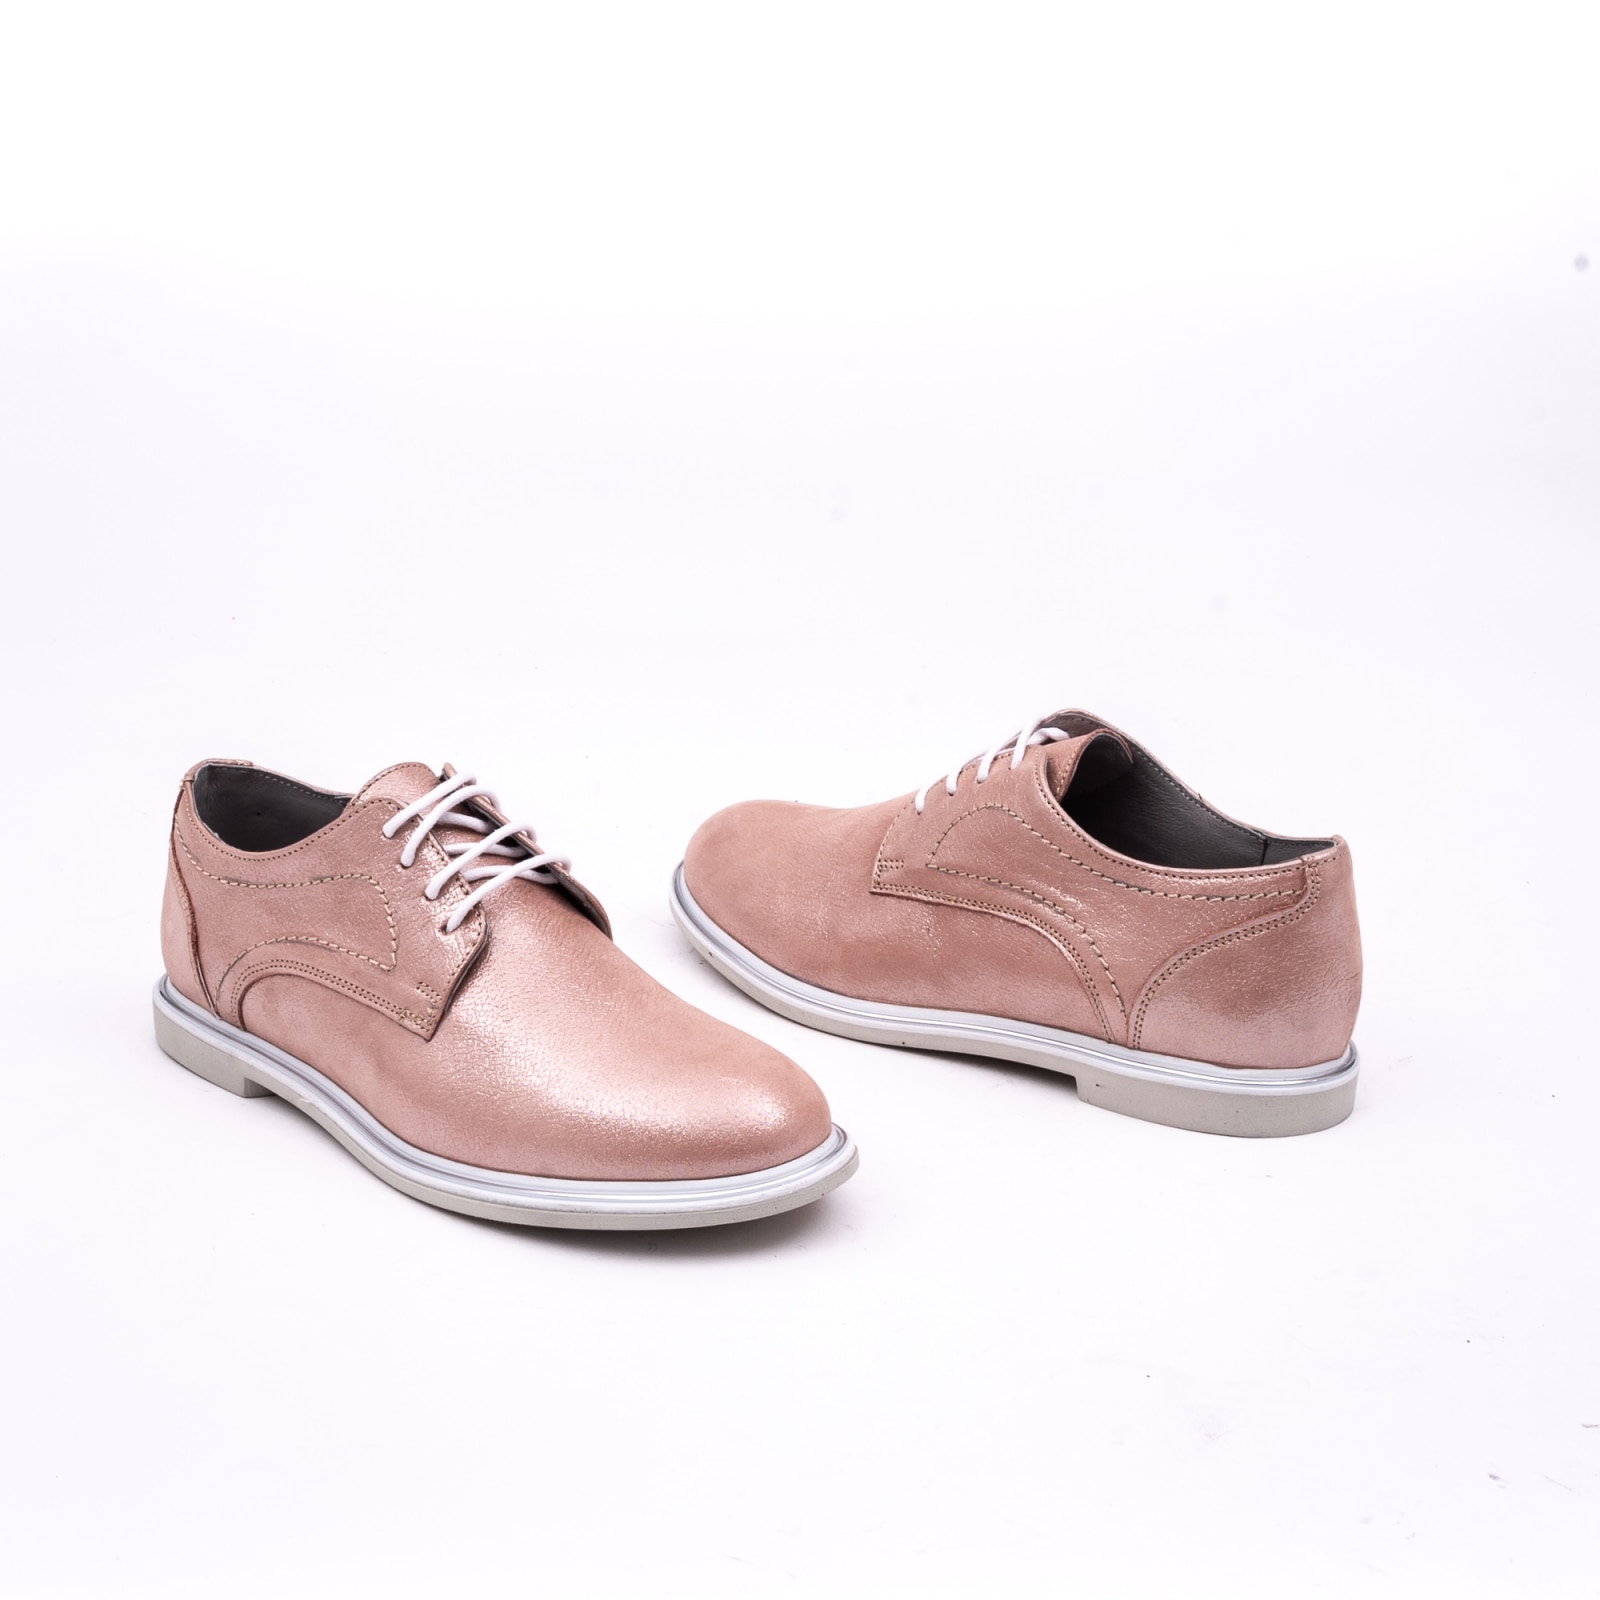 Pantofi casual dama fabricatie Catali Shoes pudra ,100% piele naturala,39 -